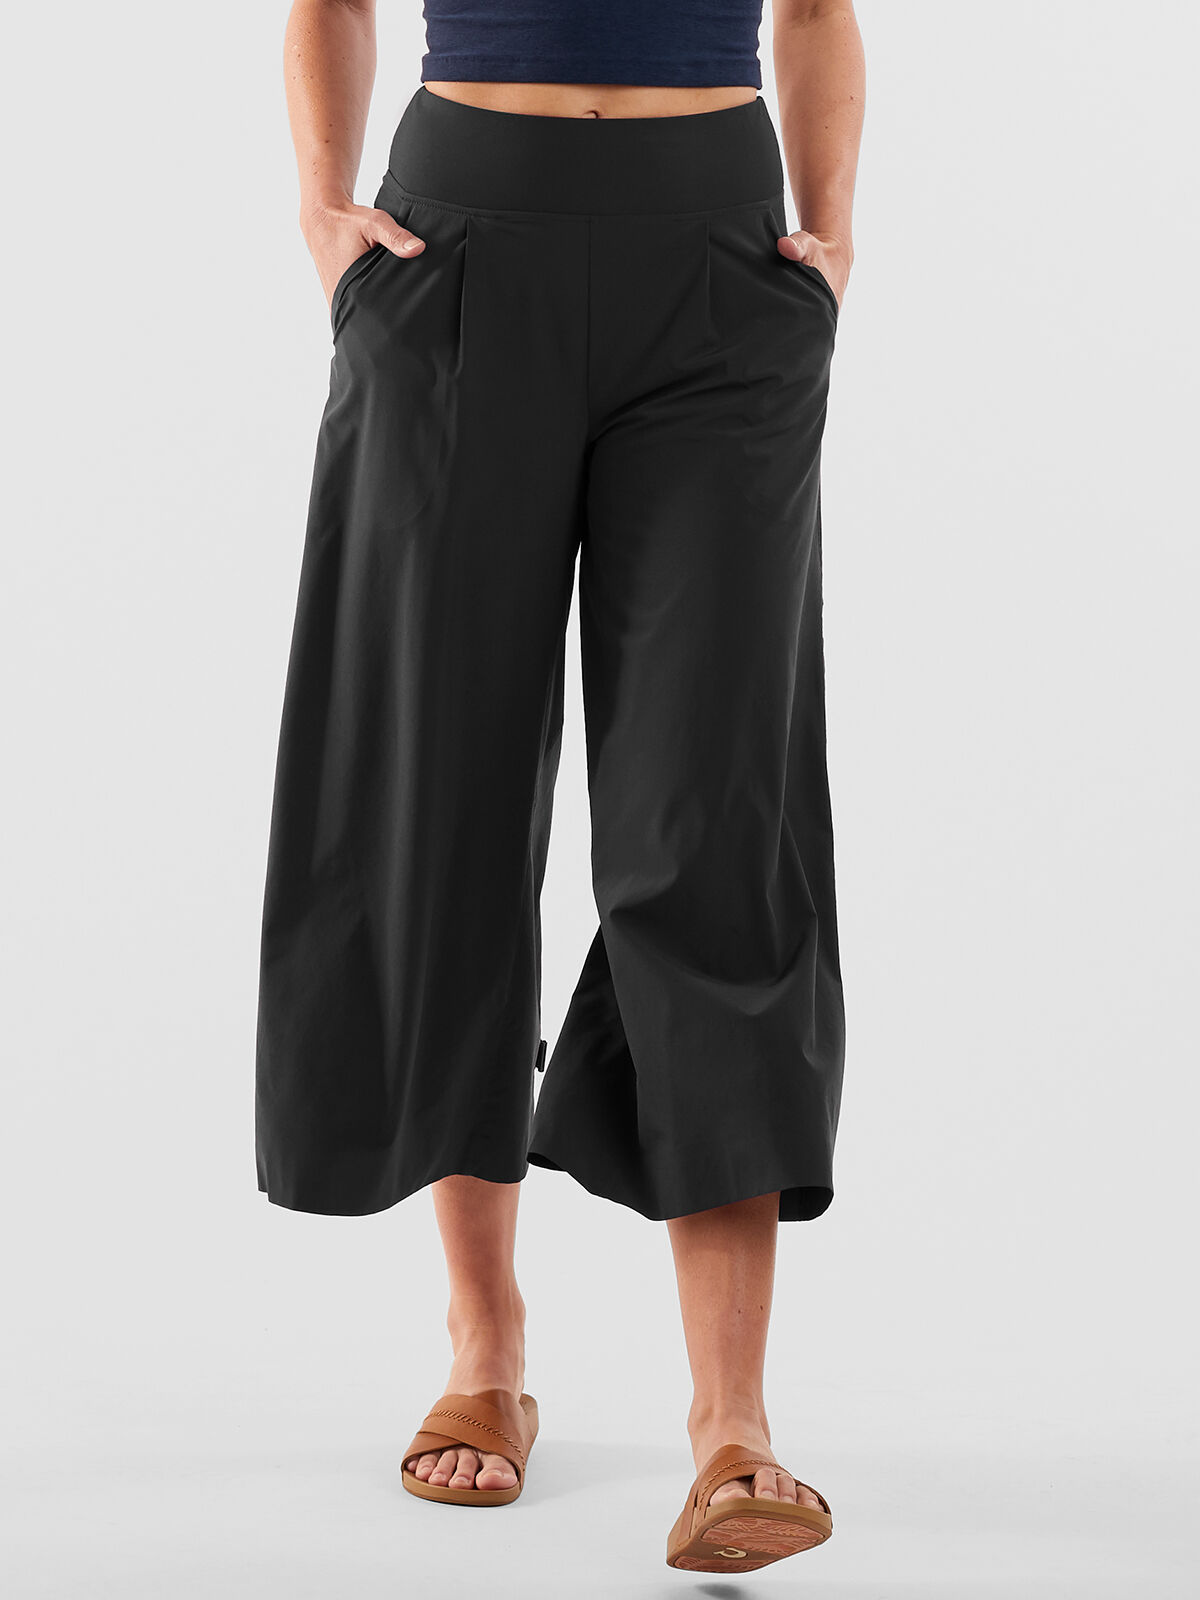 Old Navy Womens High-Rise Pixie Ankle Pants Tan Khaki Secret Pocket Dress  20 | eBay